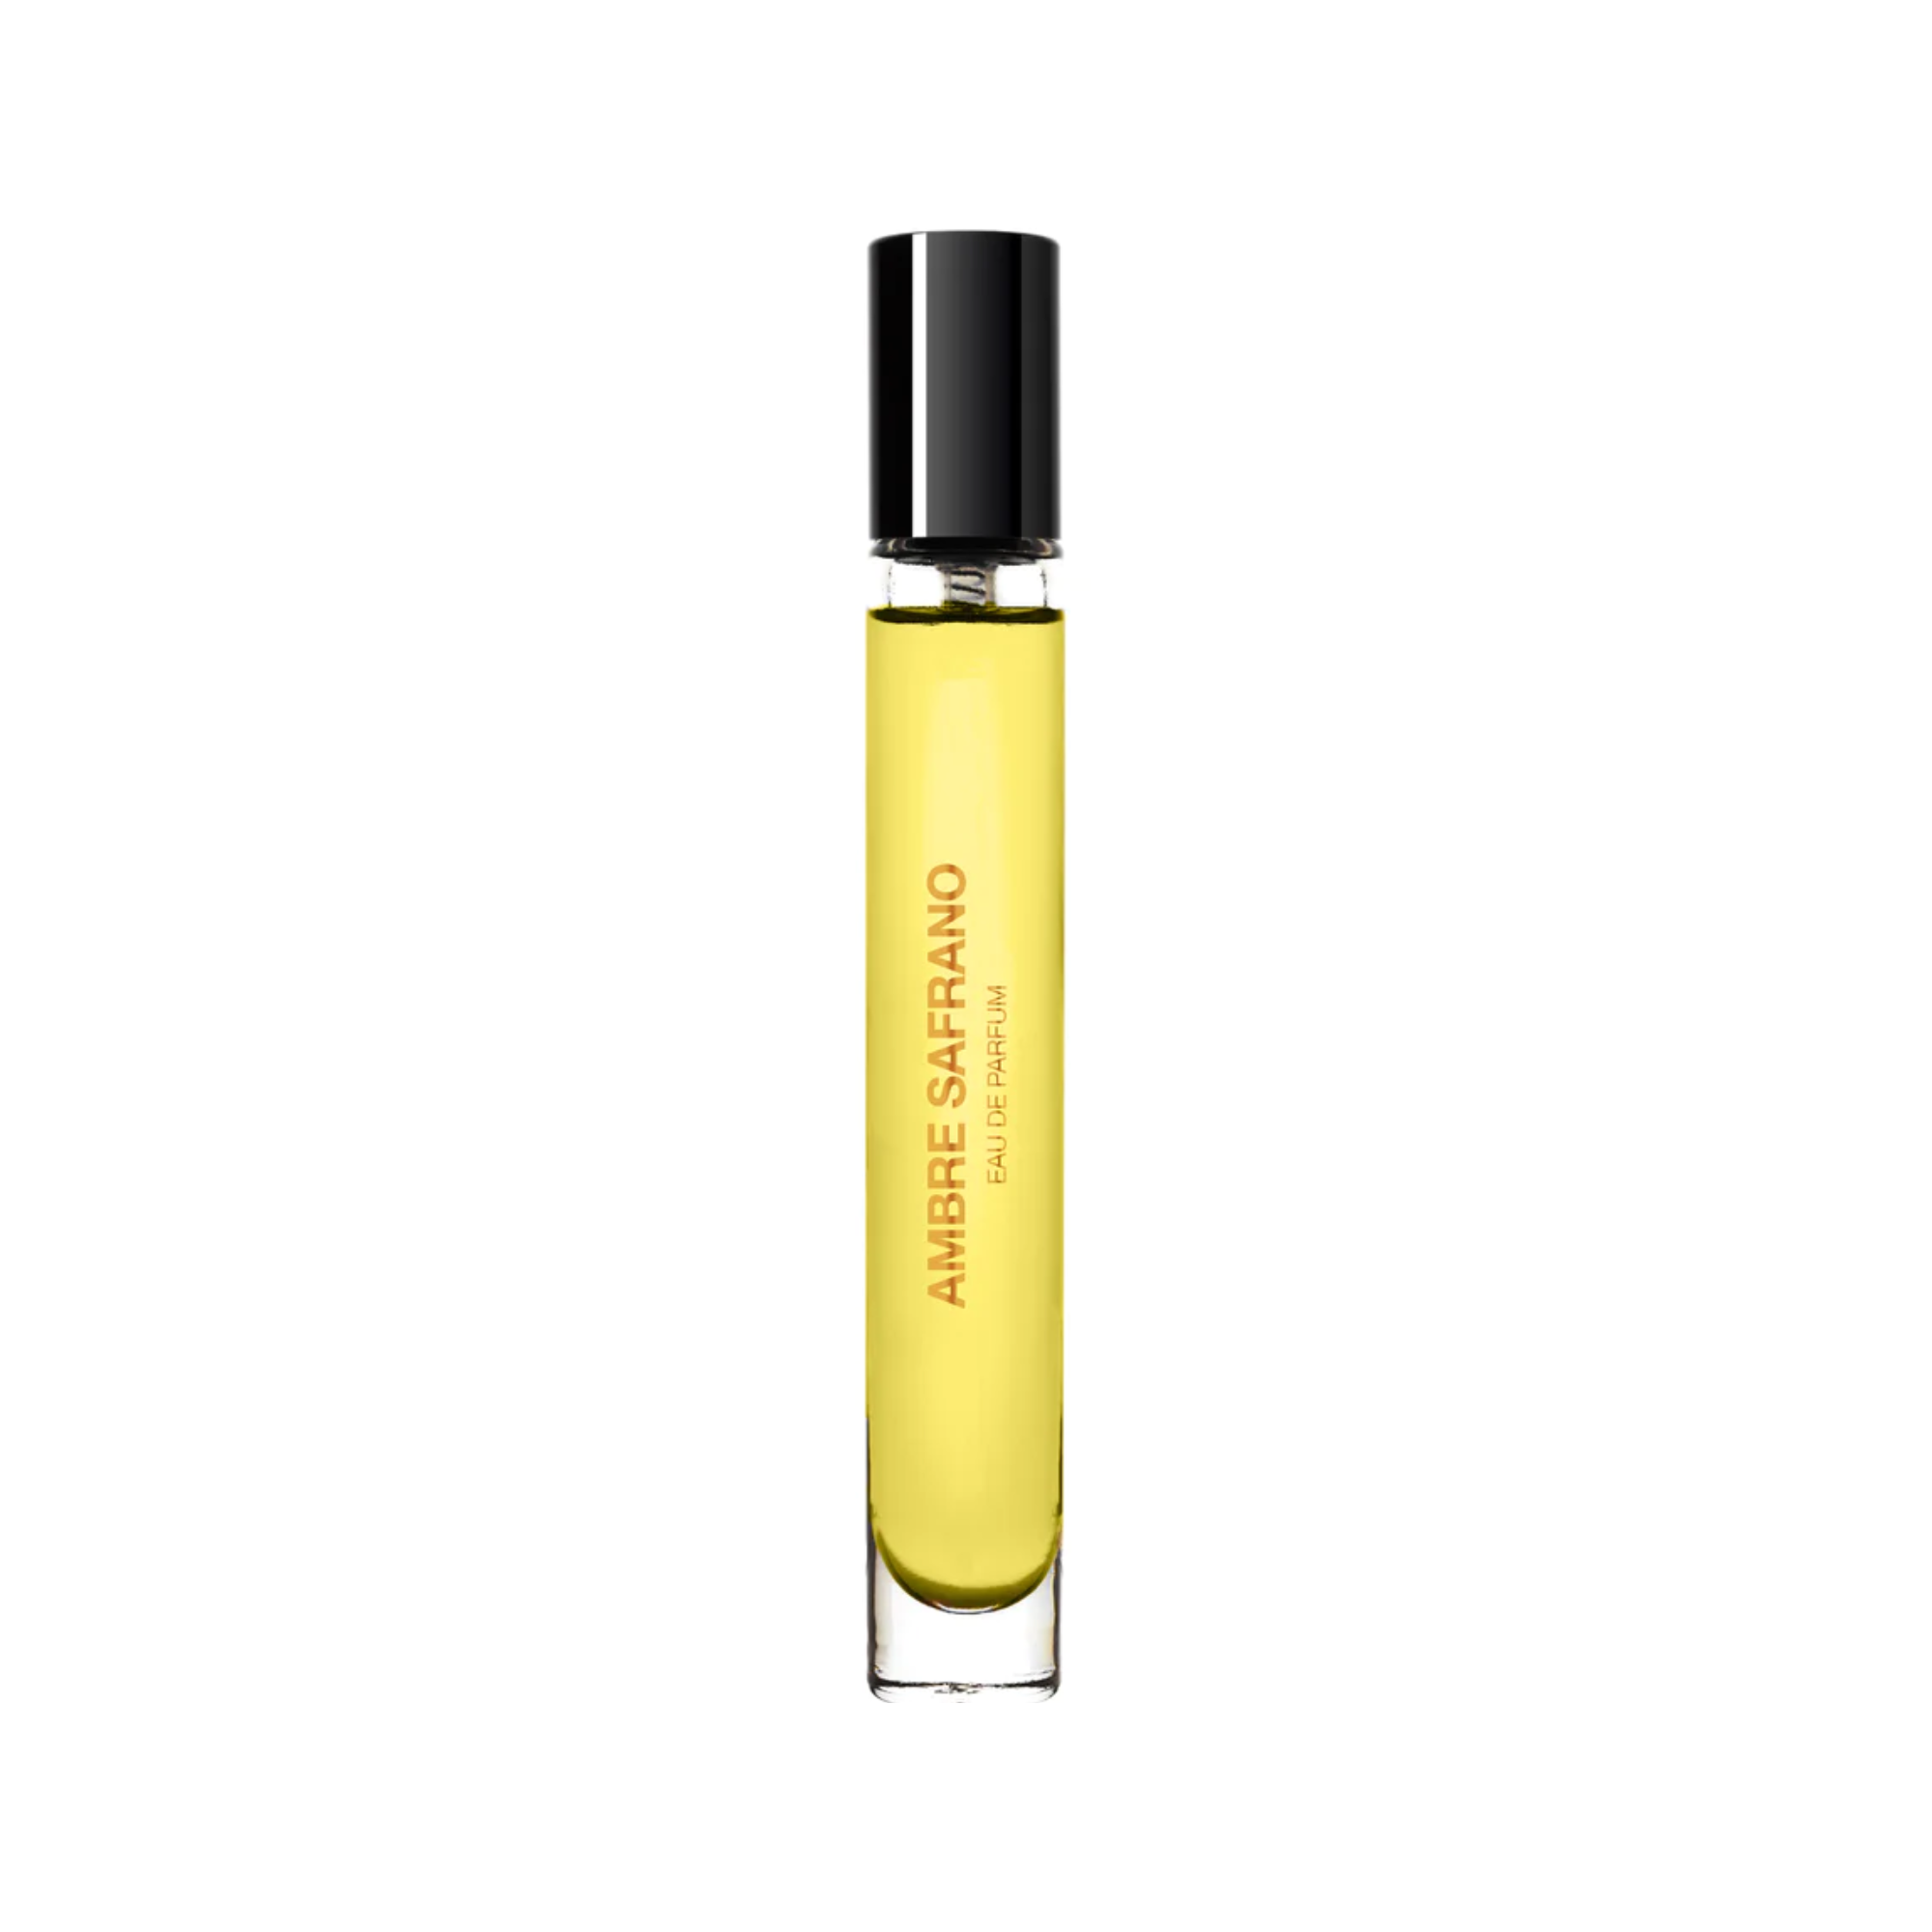 Ambre Safrano EDP 10ml Travel Spray - Lore Perfumery